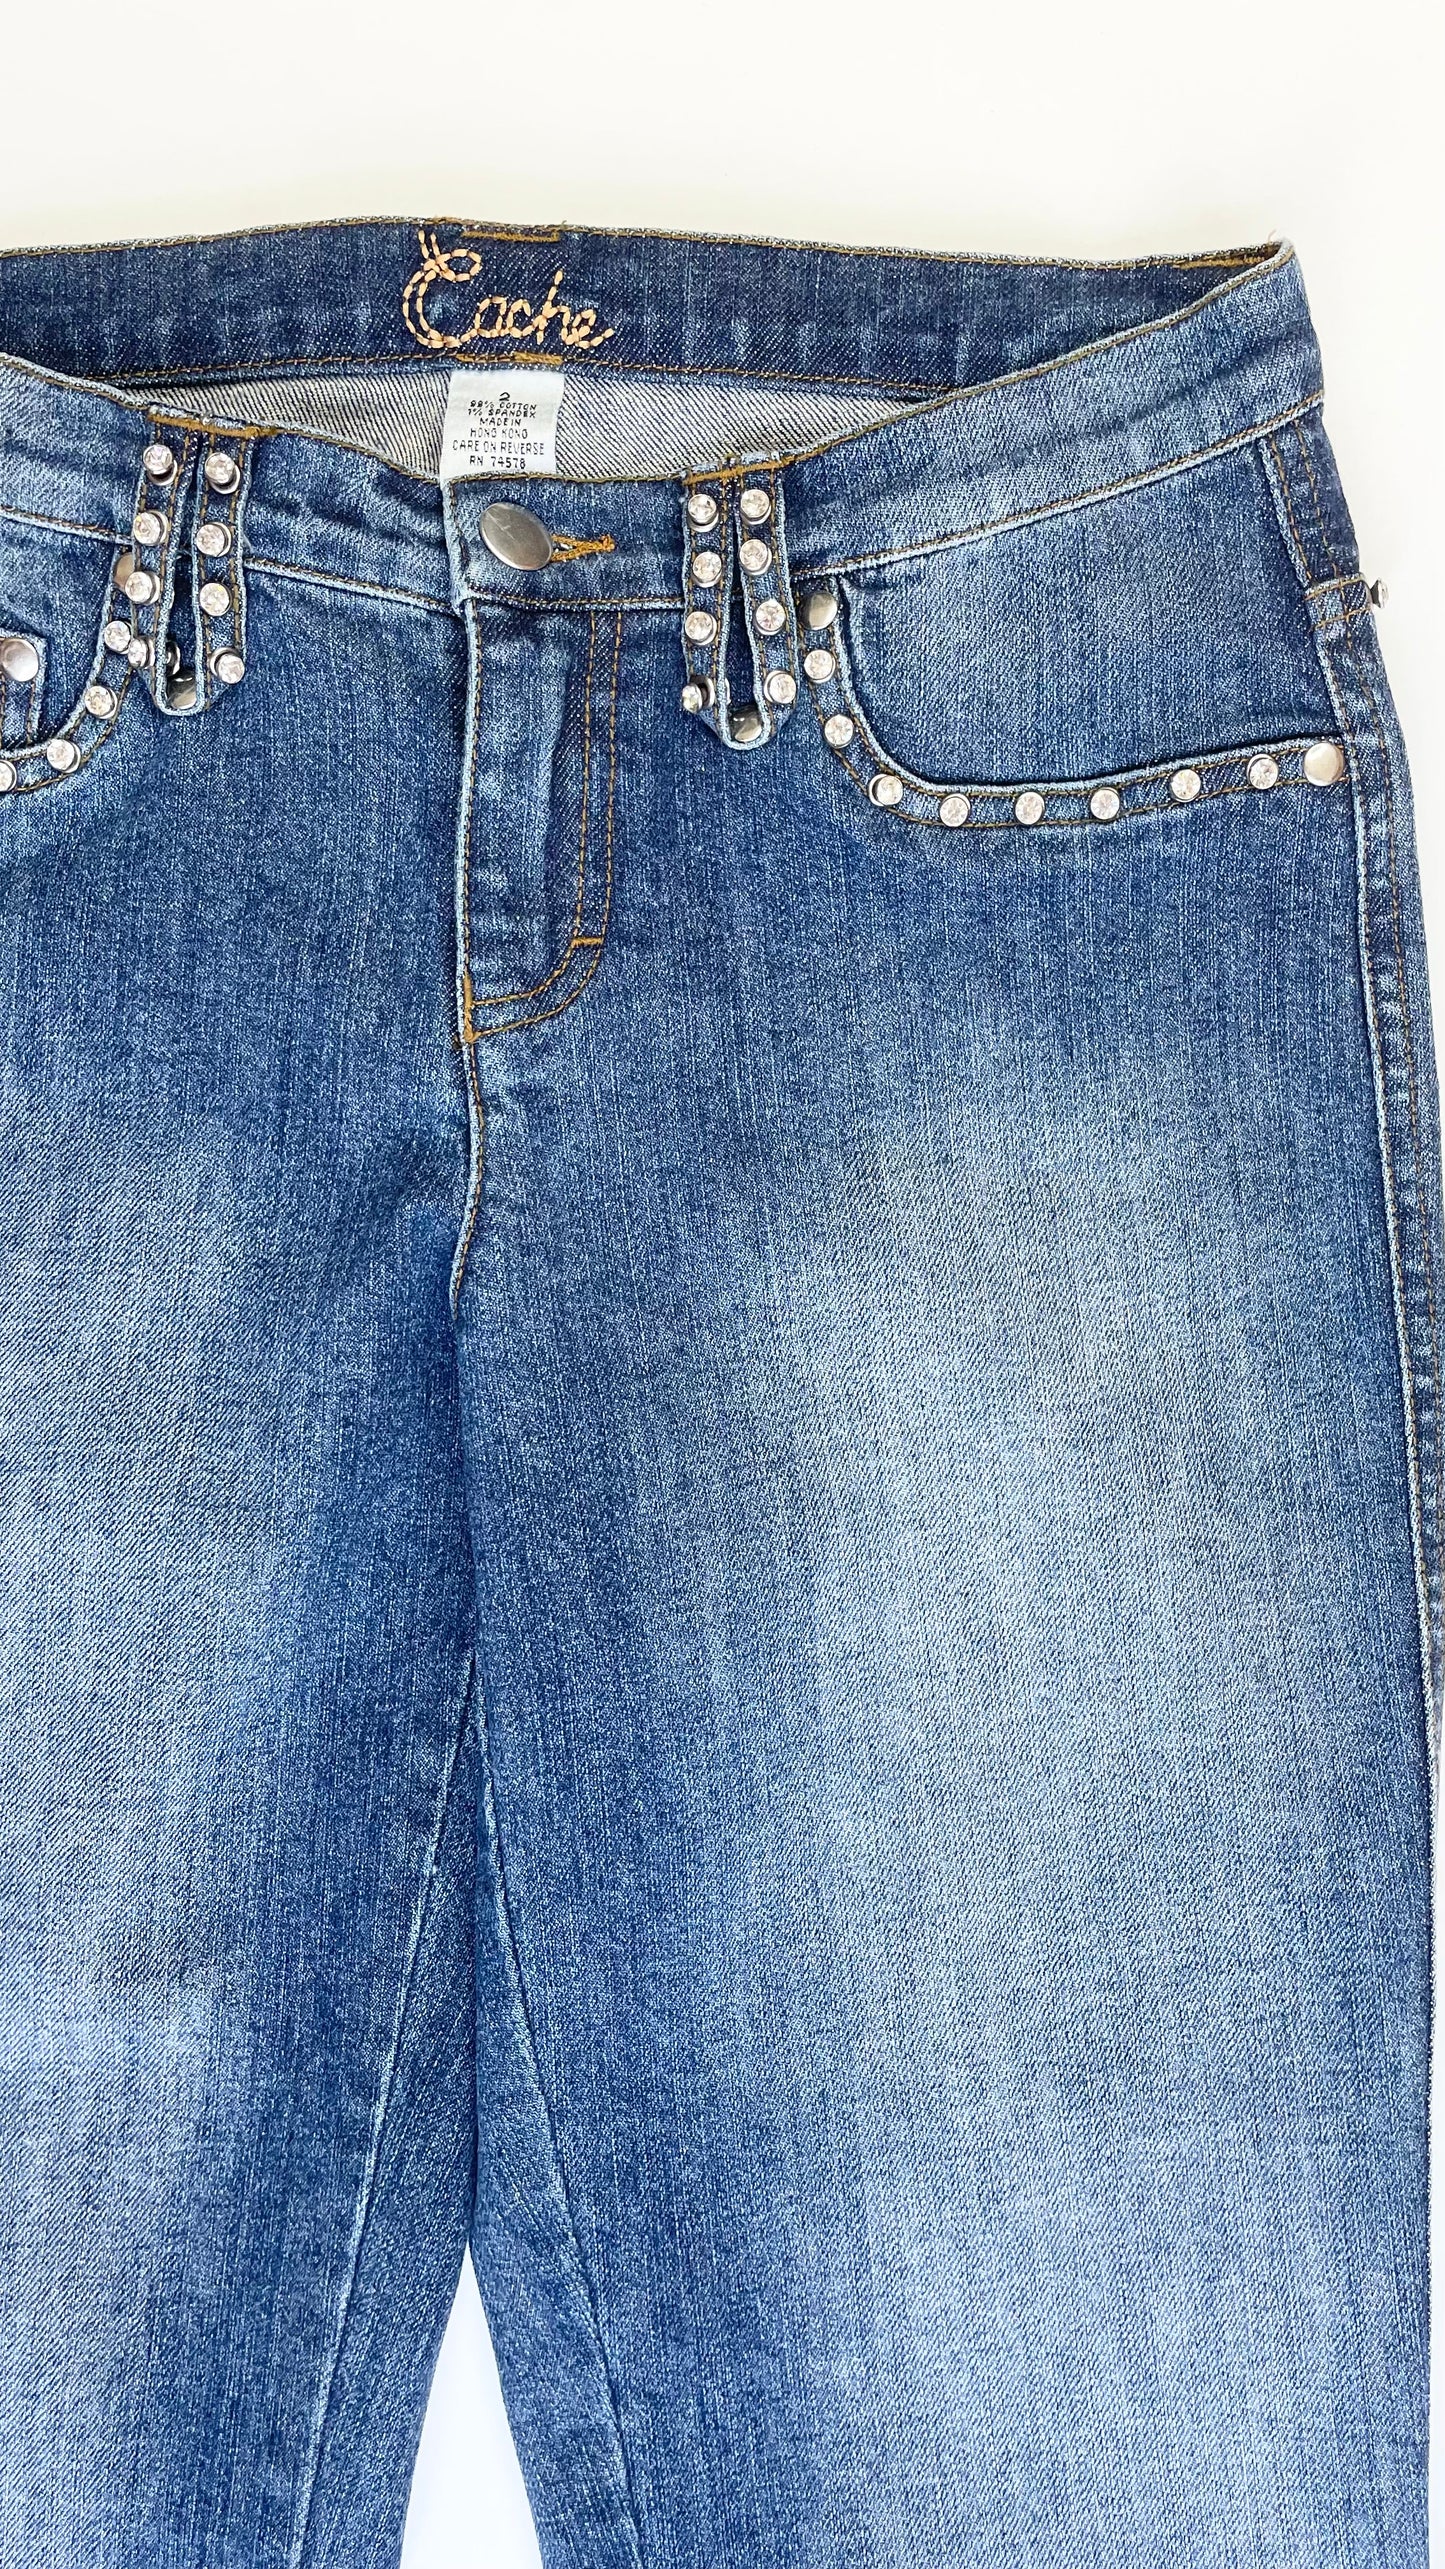 Y2K Cache mid blue bootcut jeans - Size 2